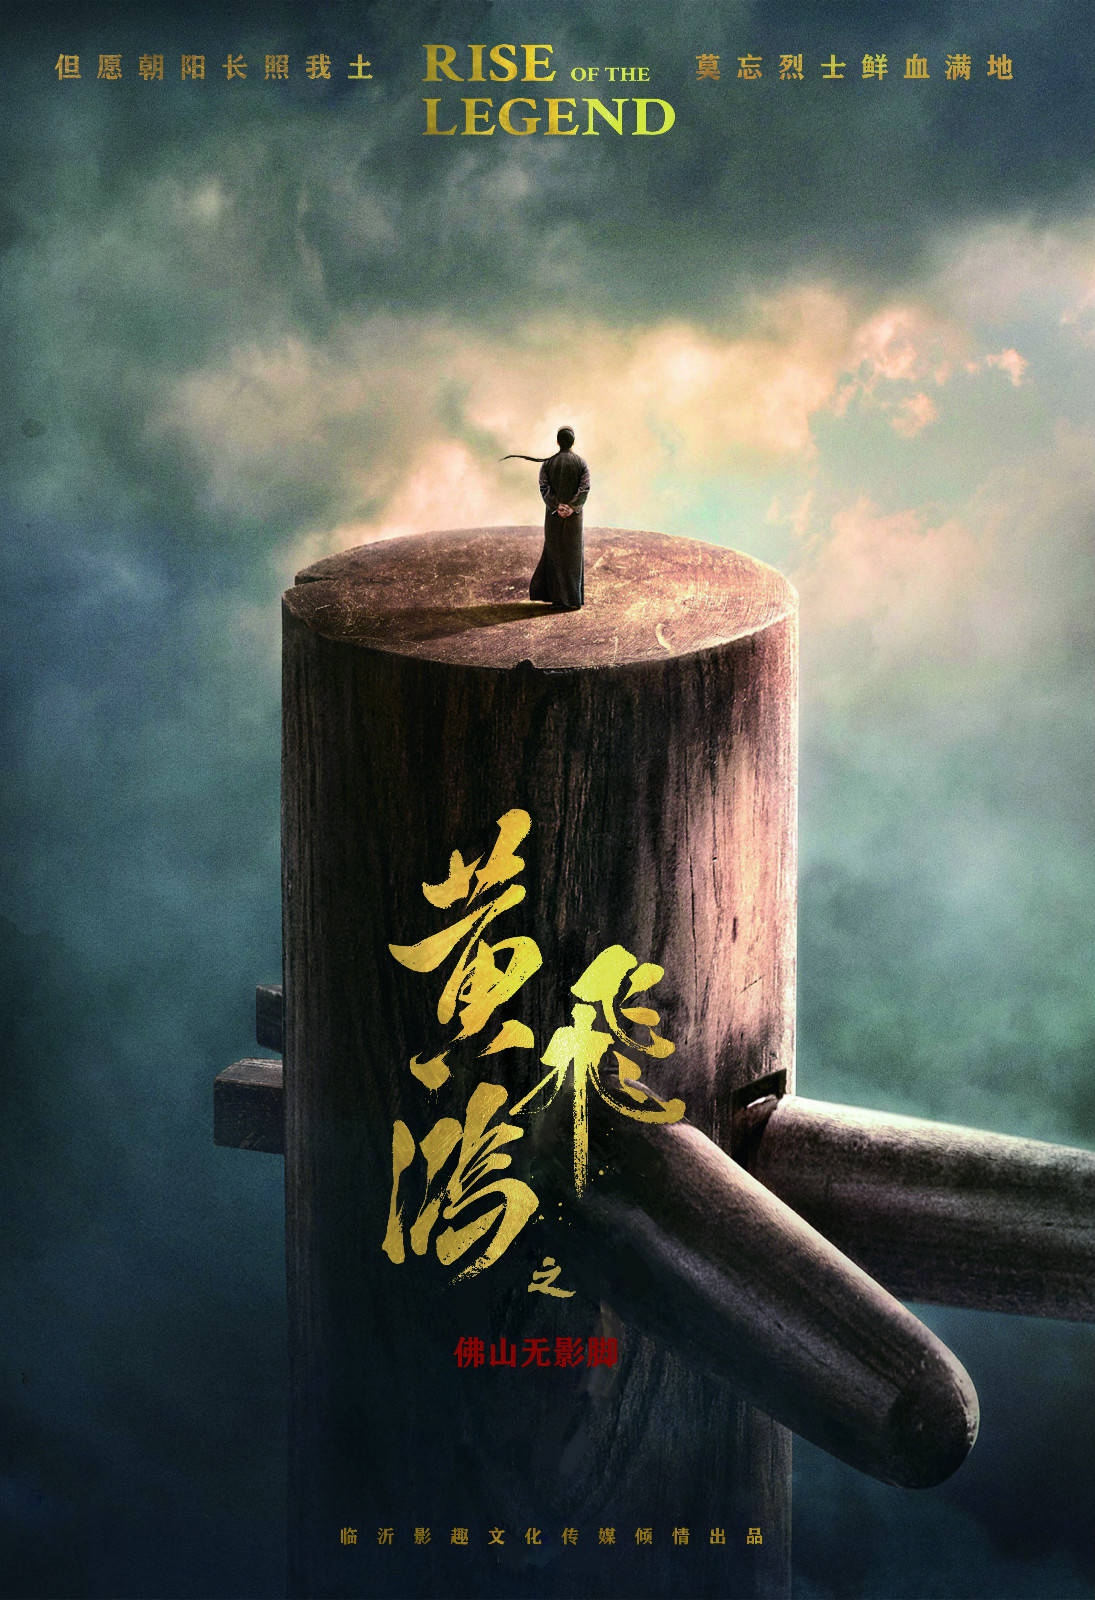 [2016][擎天无影脚黄麒英/Master of the Shadowless Kick Wong Kei-ying][中国大陆][杨了/陈之辉/侯旭][汉语中字][MKV/5.3G ...